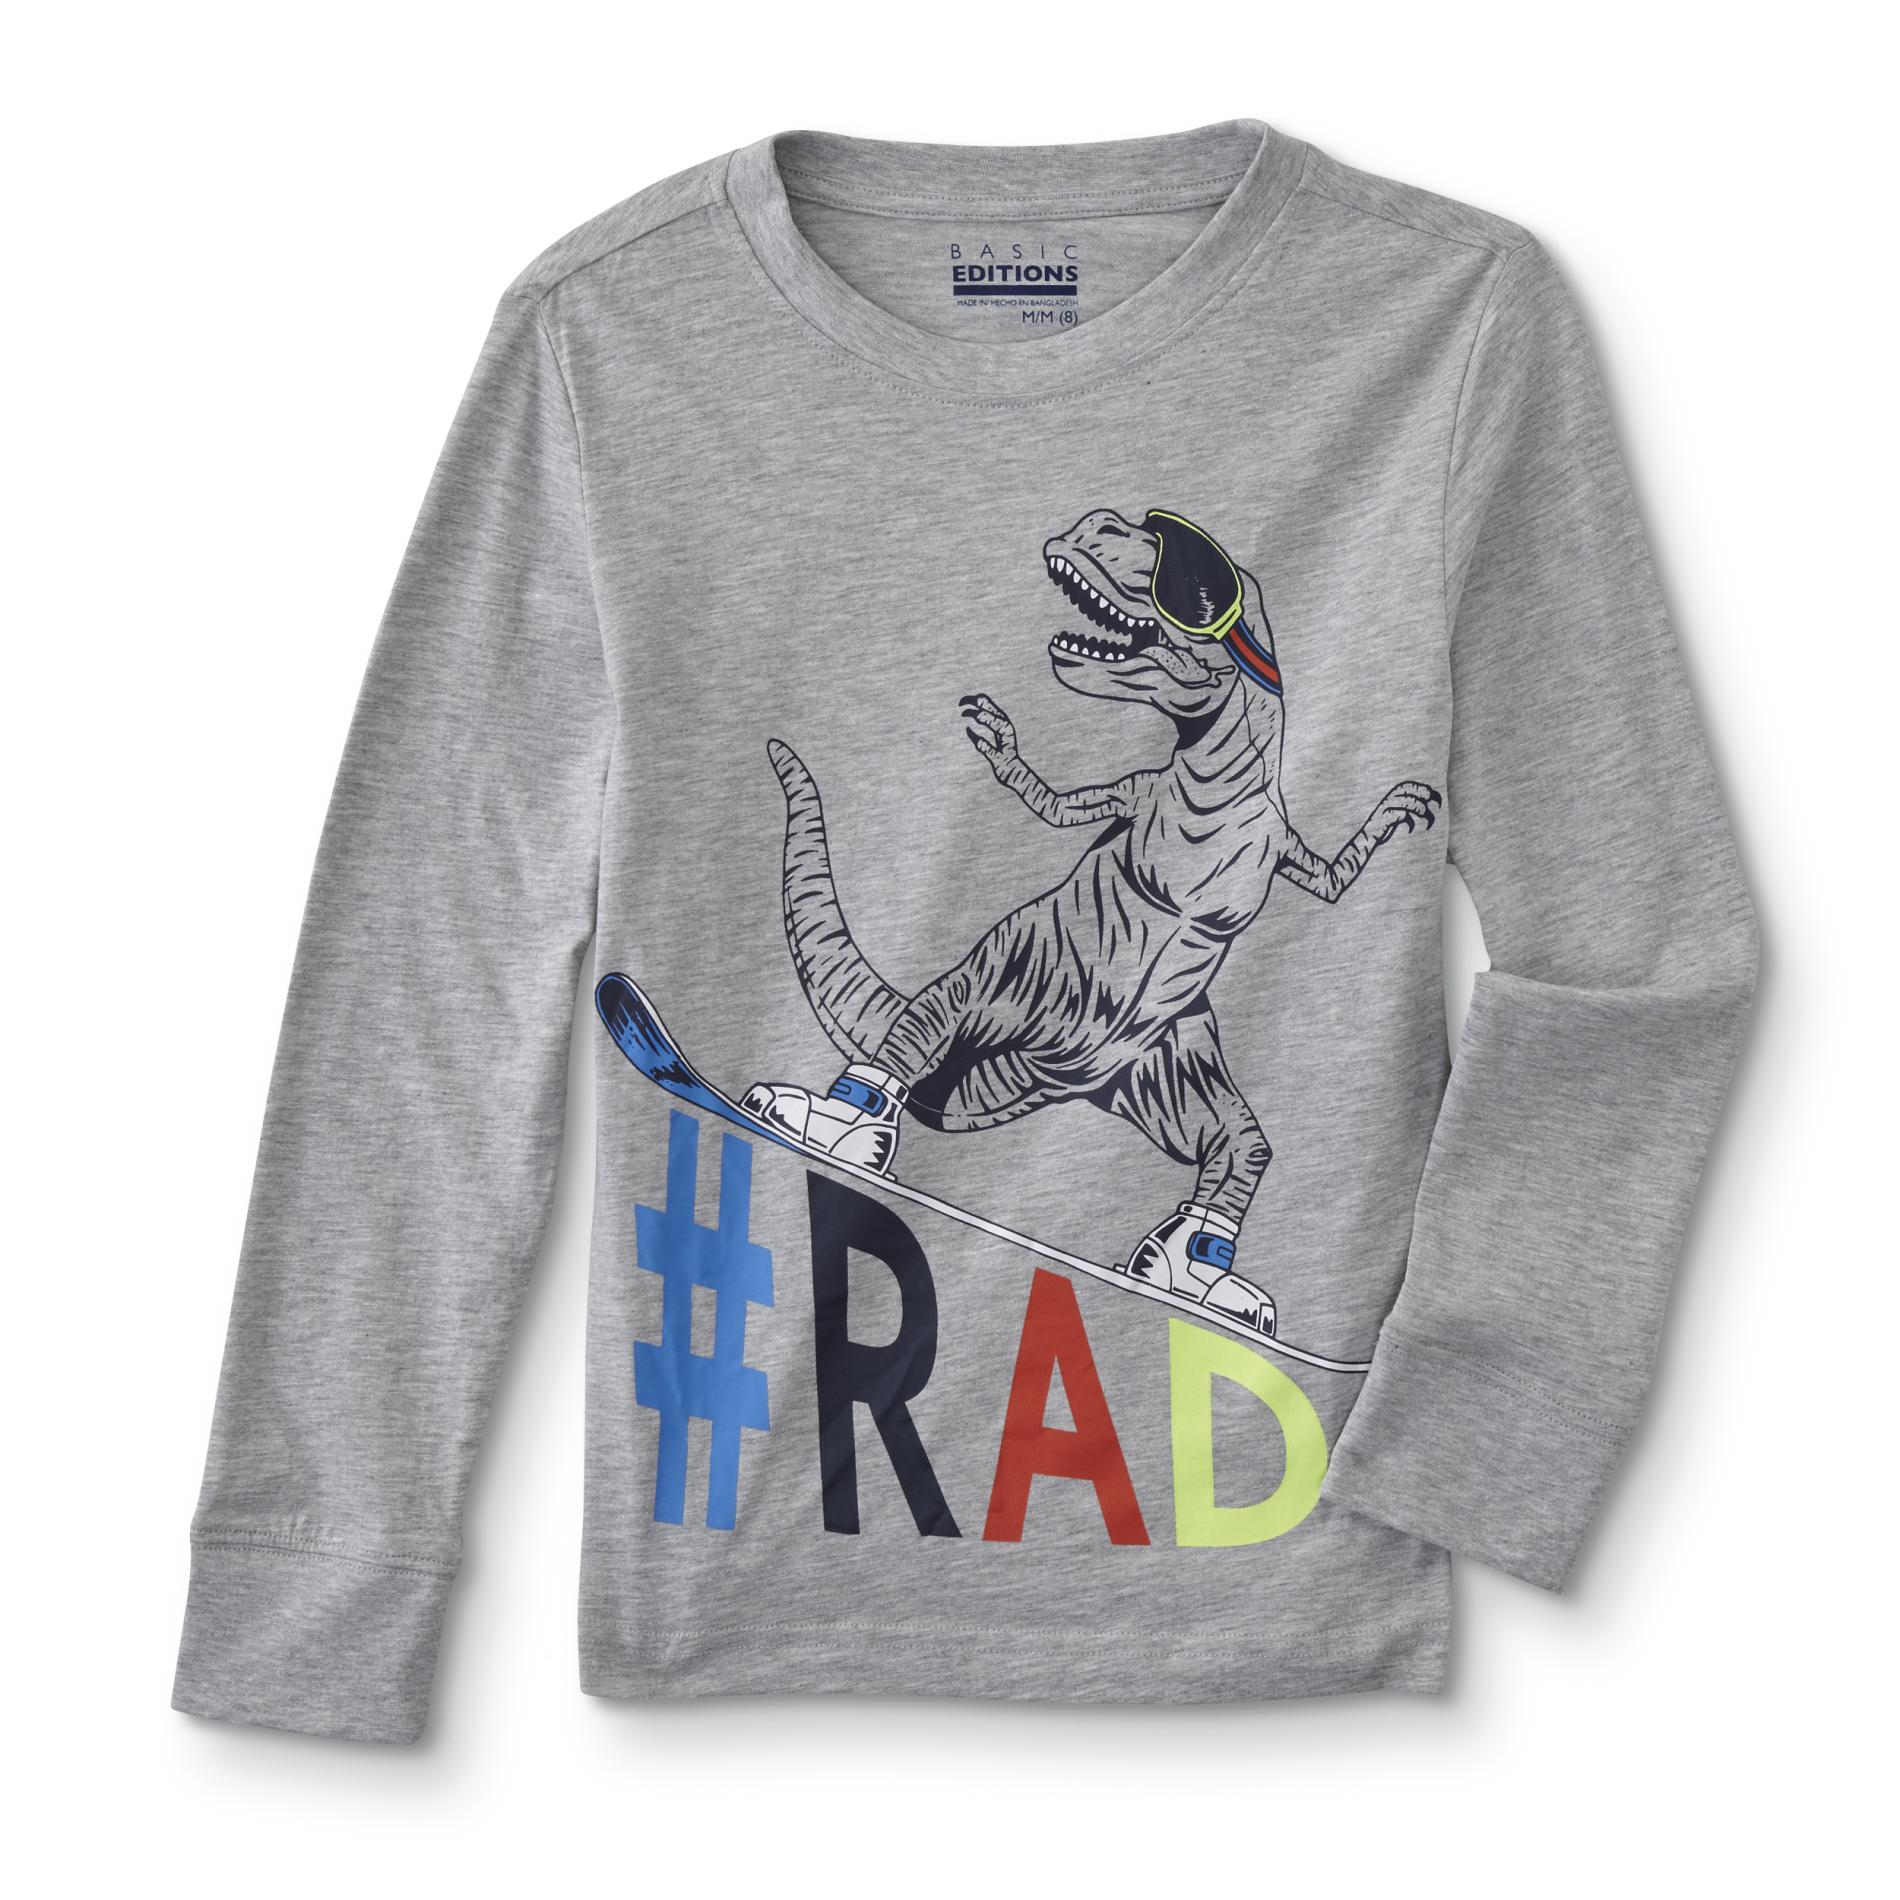 Basic Editions Boys' Long-Sleeve Graphic T-Shirt - #Rad